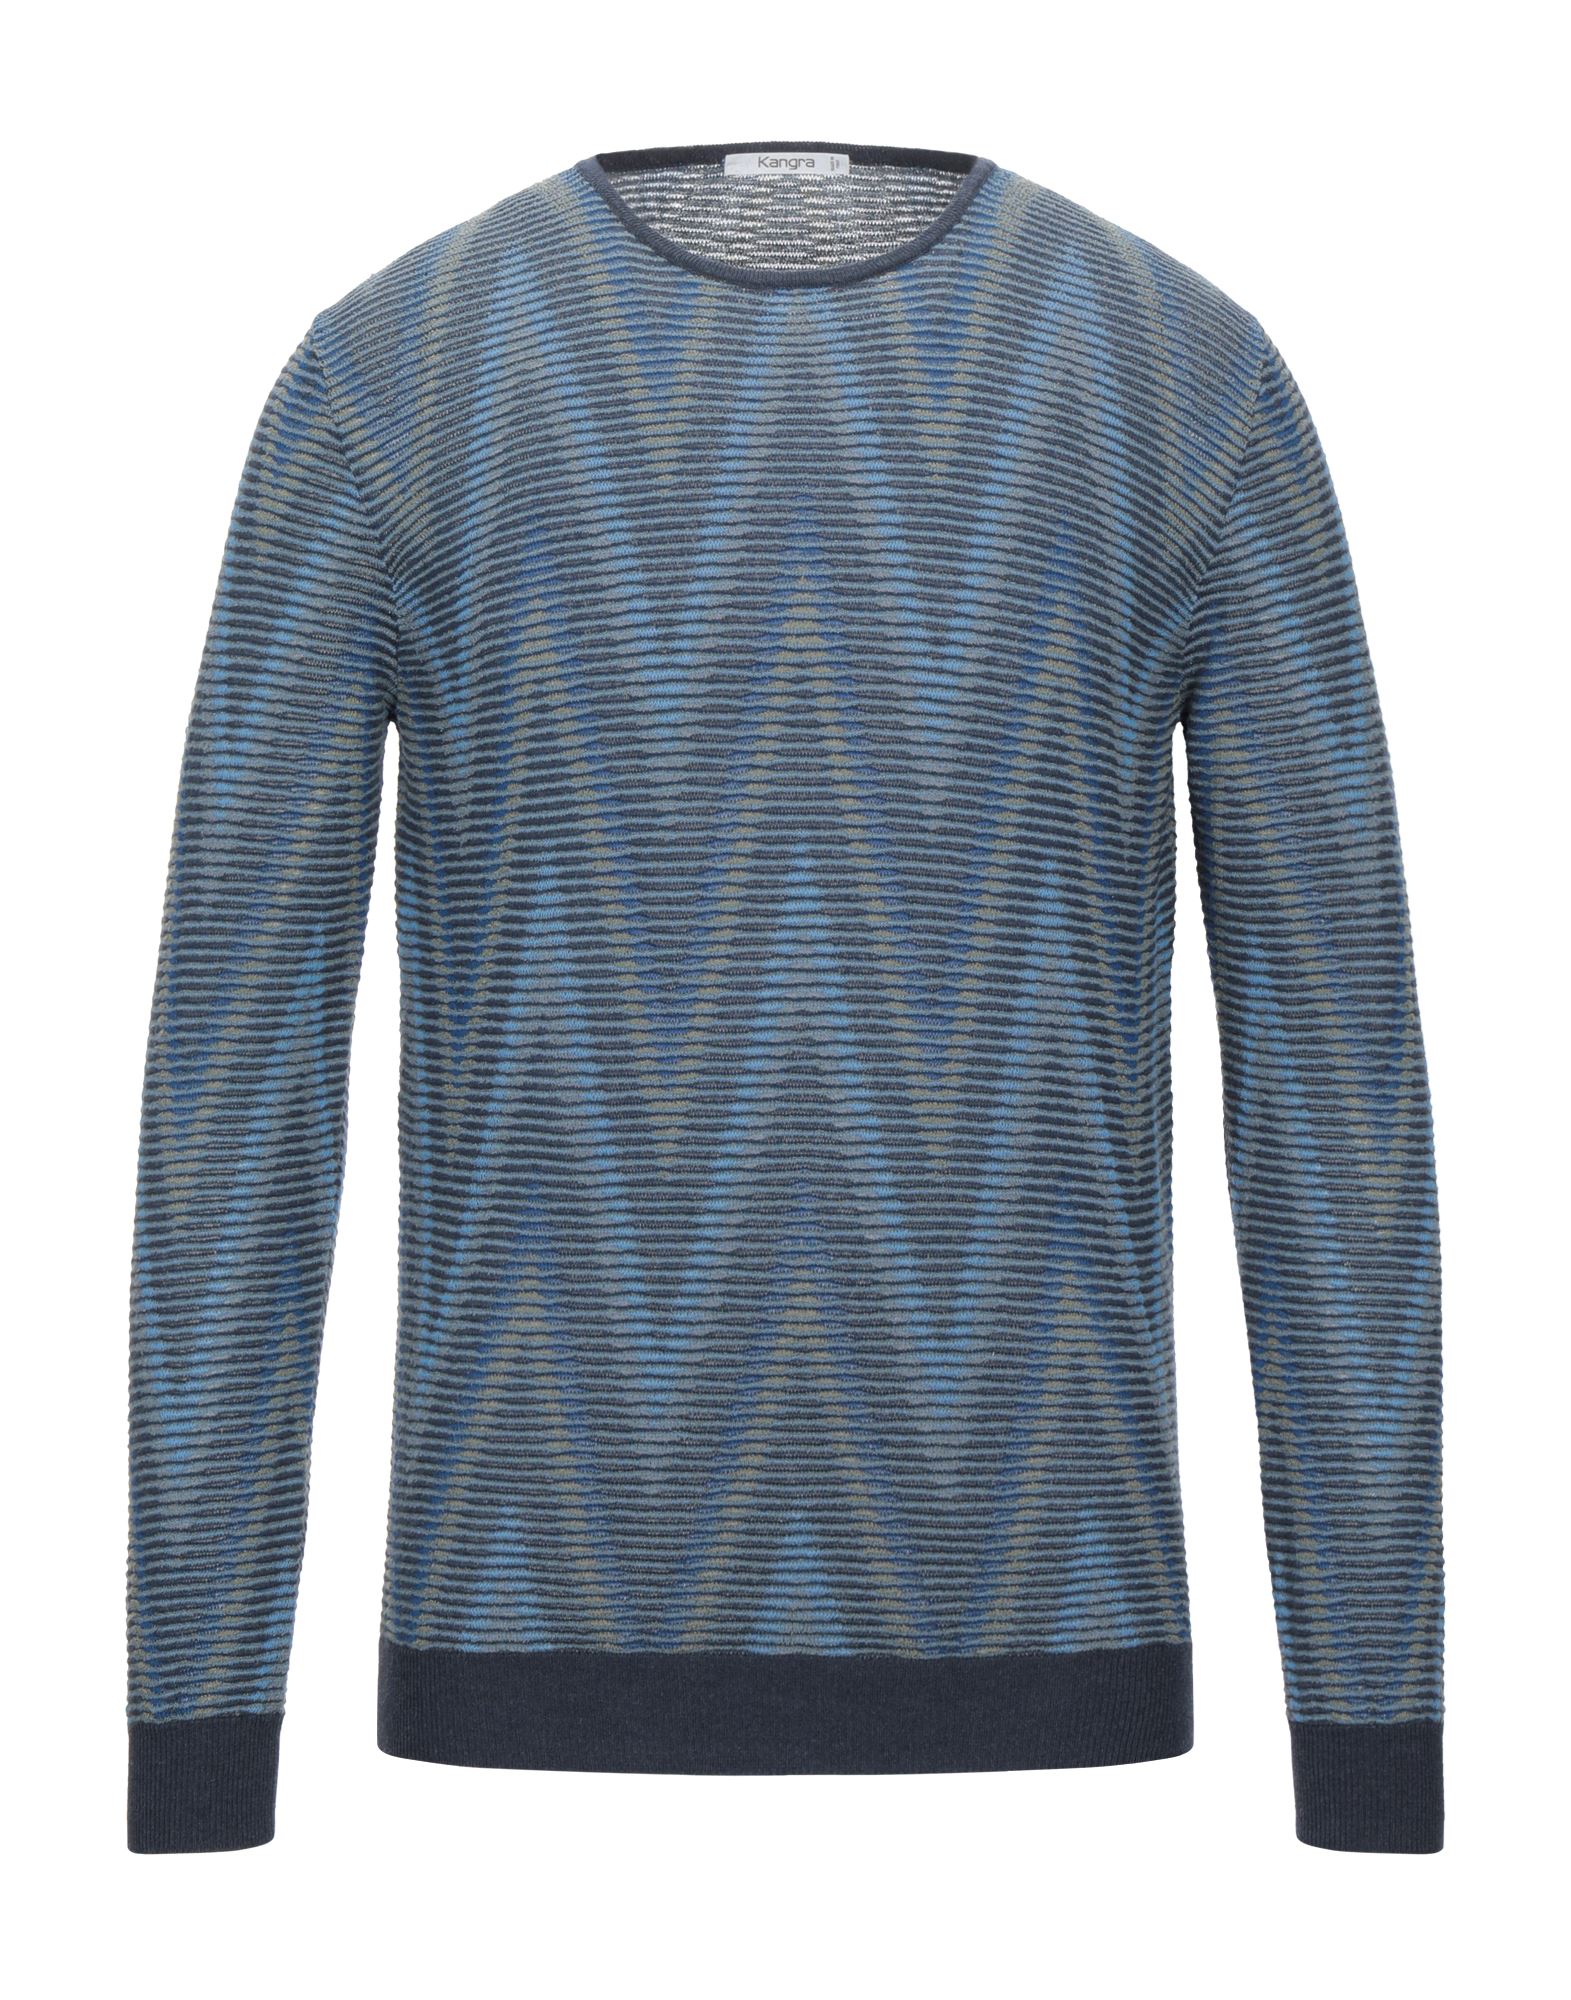 KANGRA CASHMERE Sweaters - Item 14103550